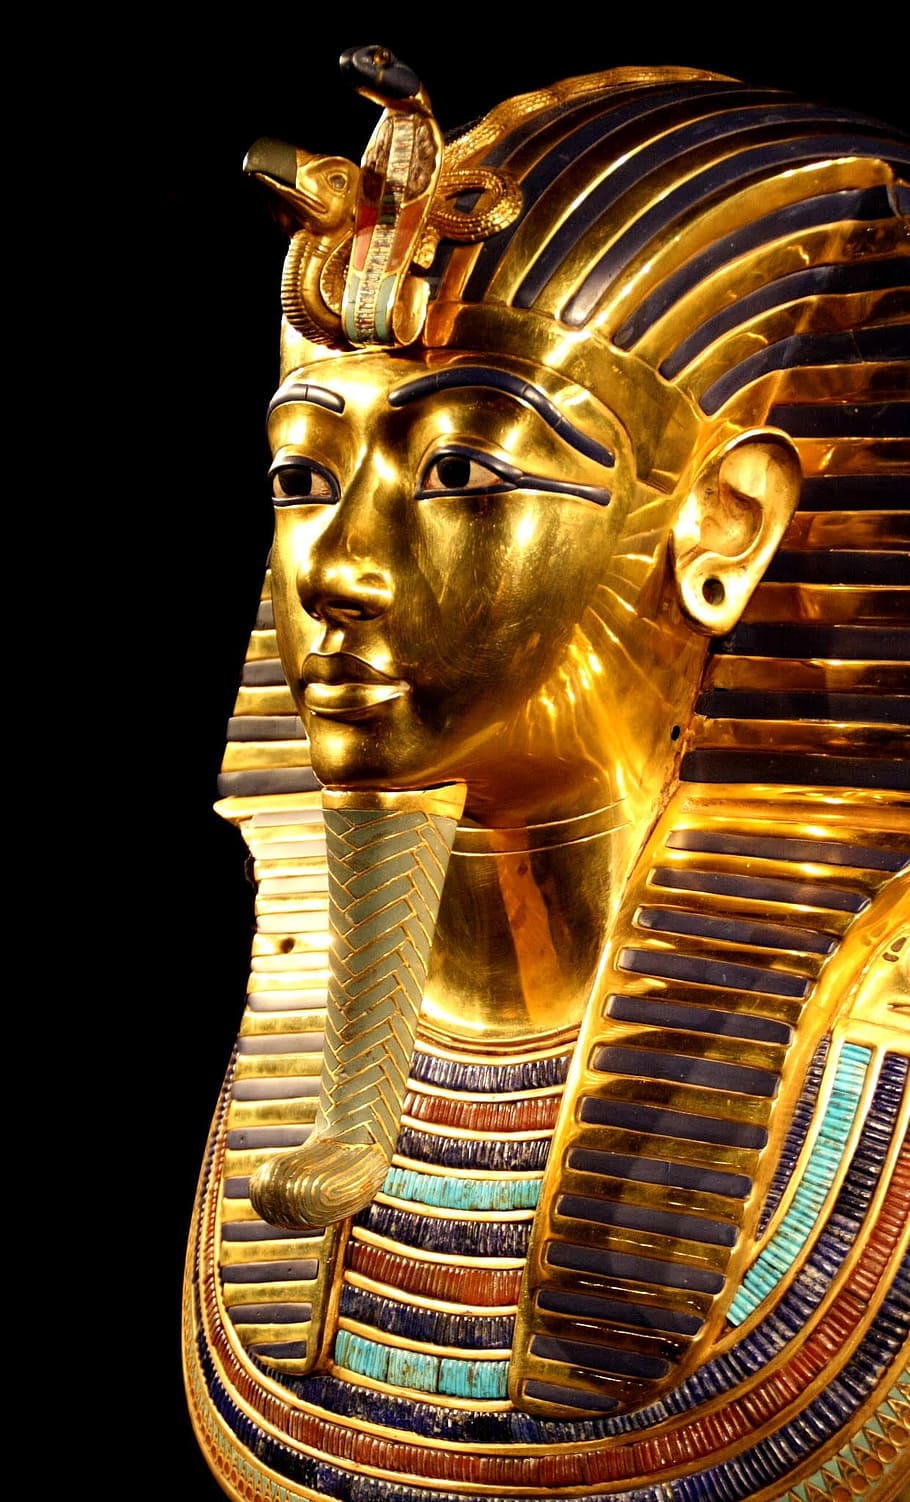 nefertiti statue, tutankhamun, death mask, pharaonic, egypt, sculpture, statue, art and craft, gold colored, representation